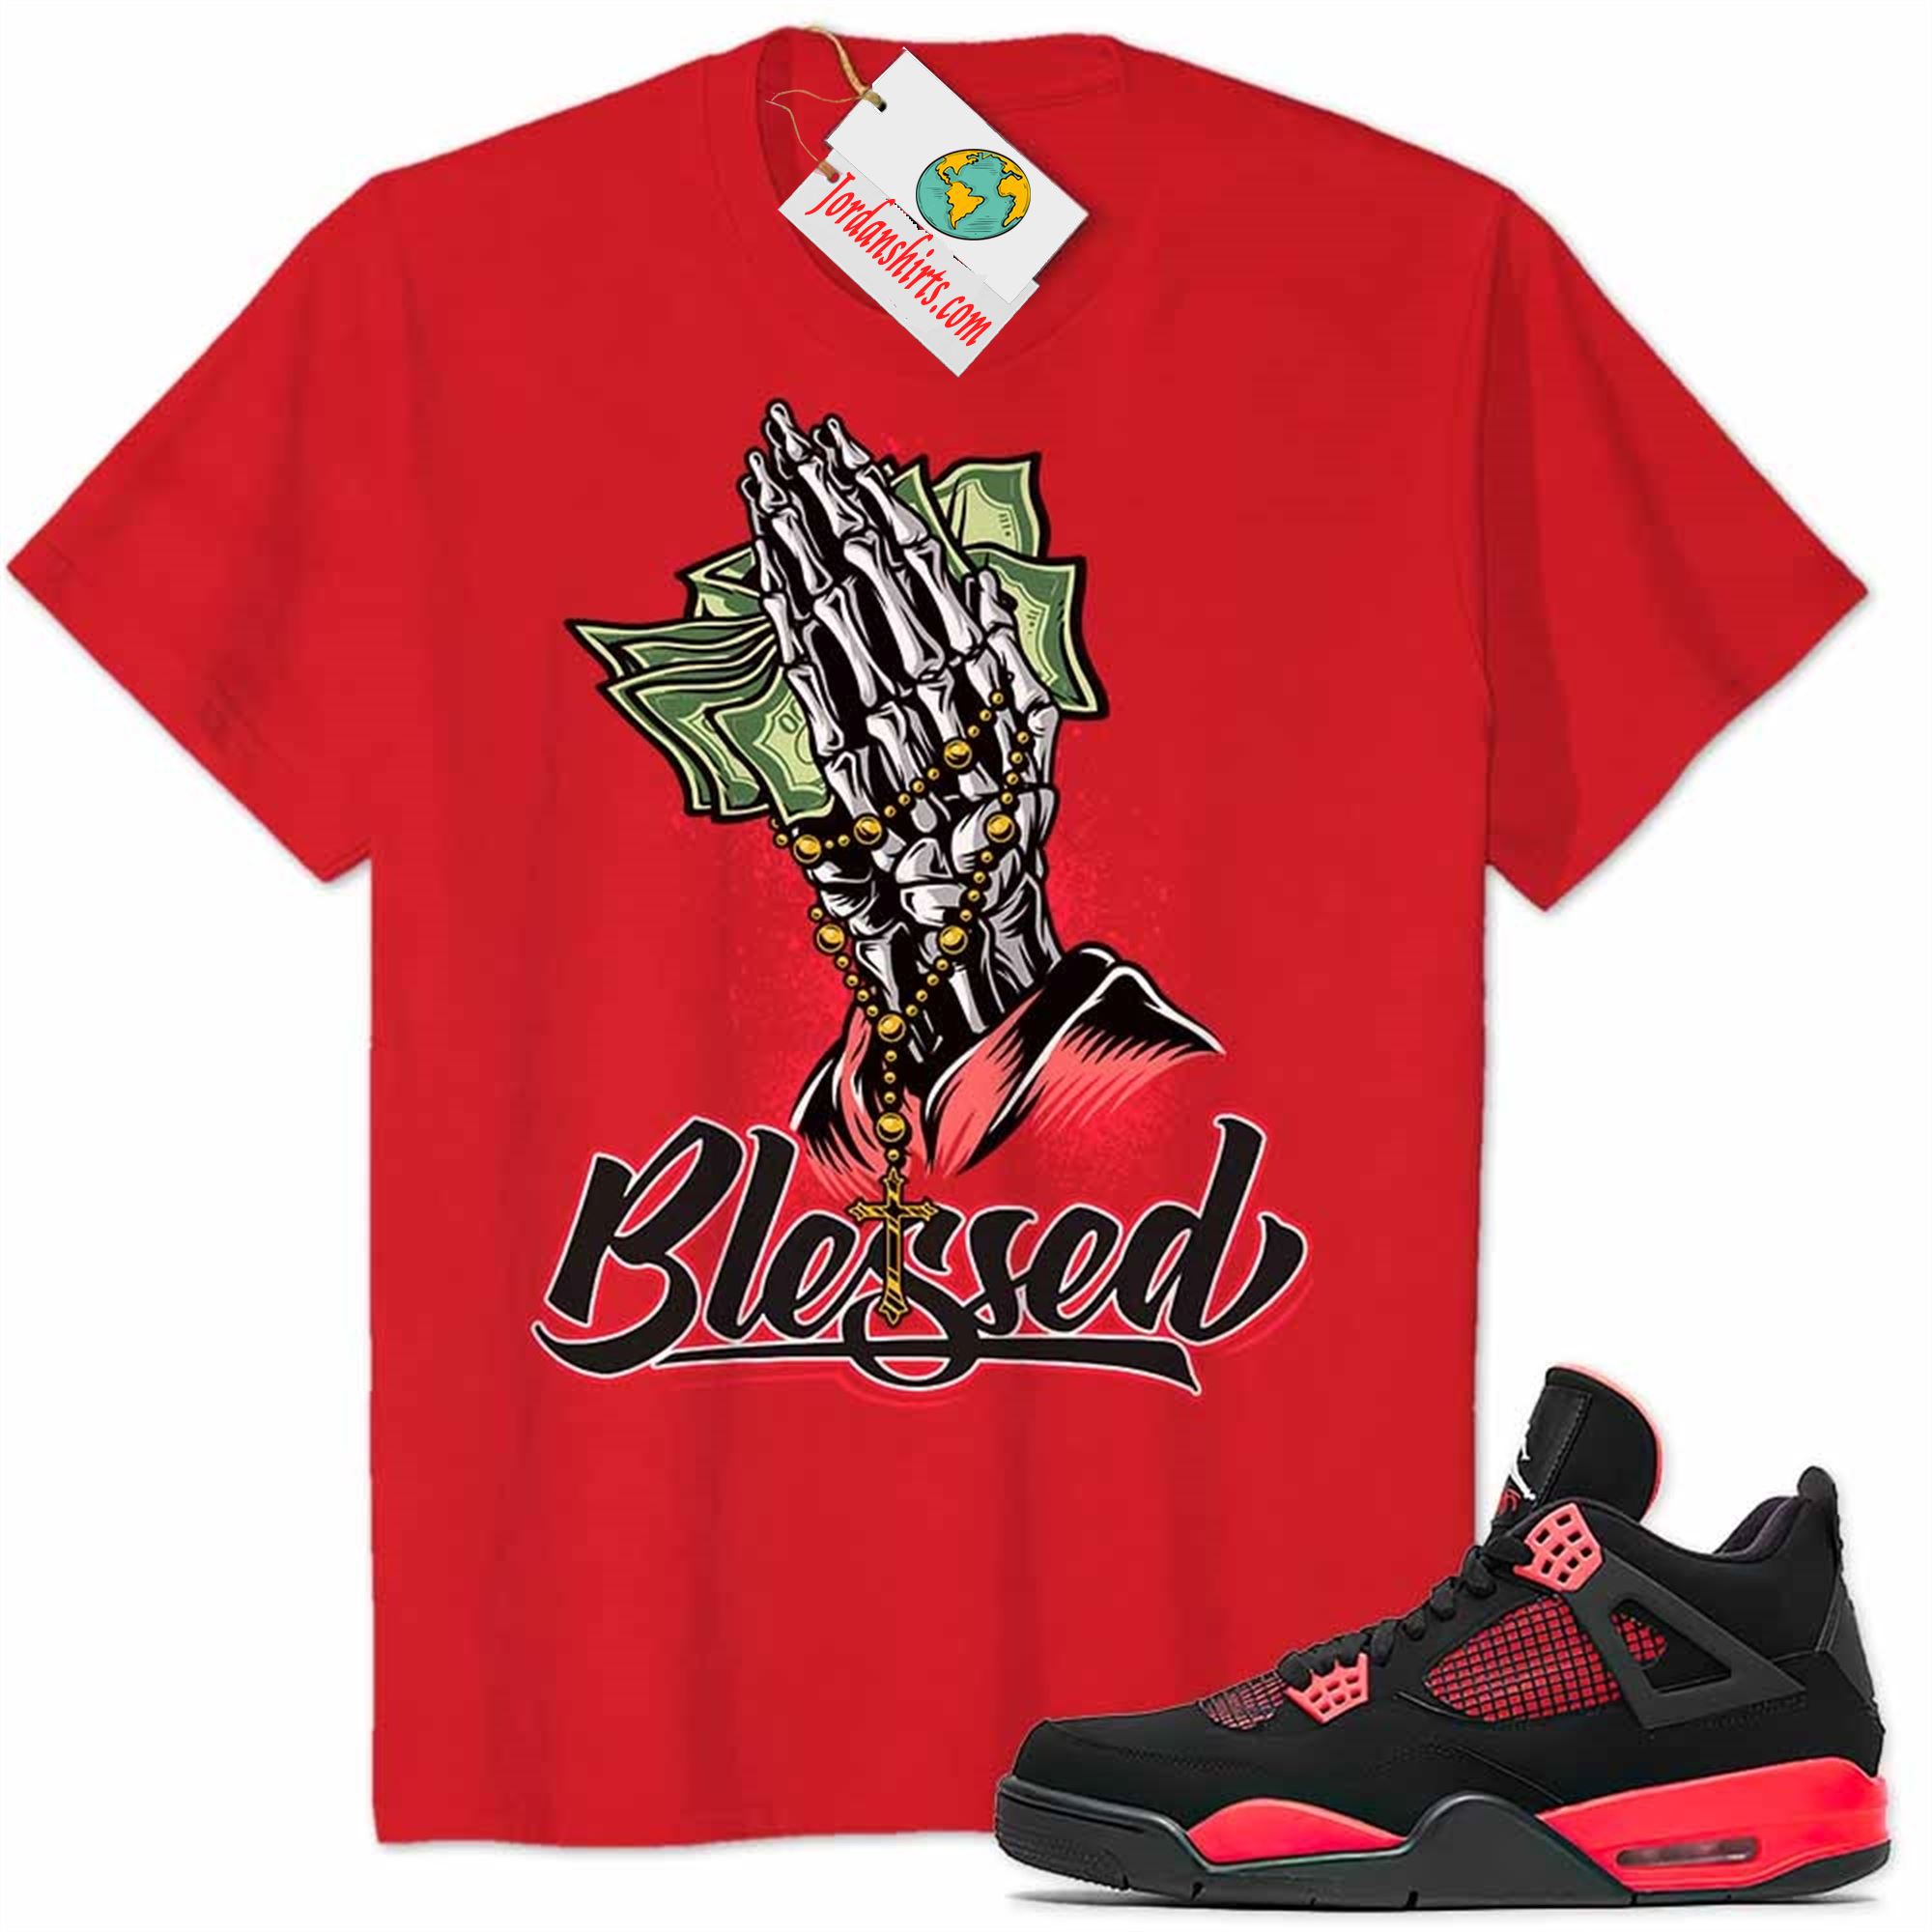 Jordan 4 Shirt, Blessed Pray Hand Money Red Air Jordan 4 Red Thunder 4s Full Size Up To 5xl